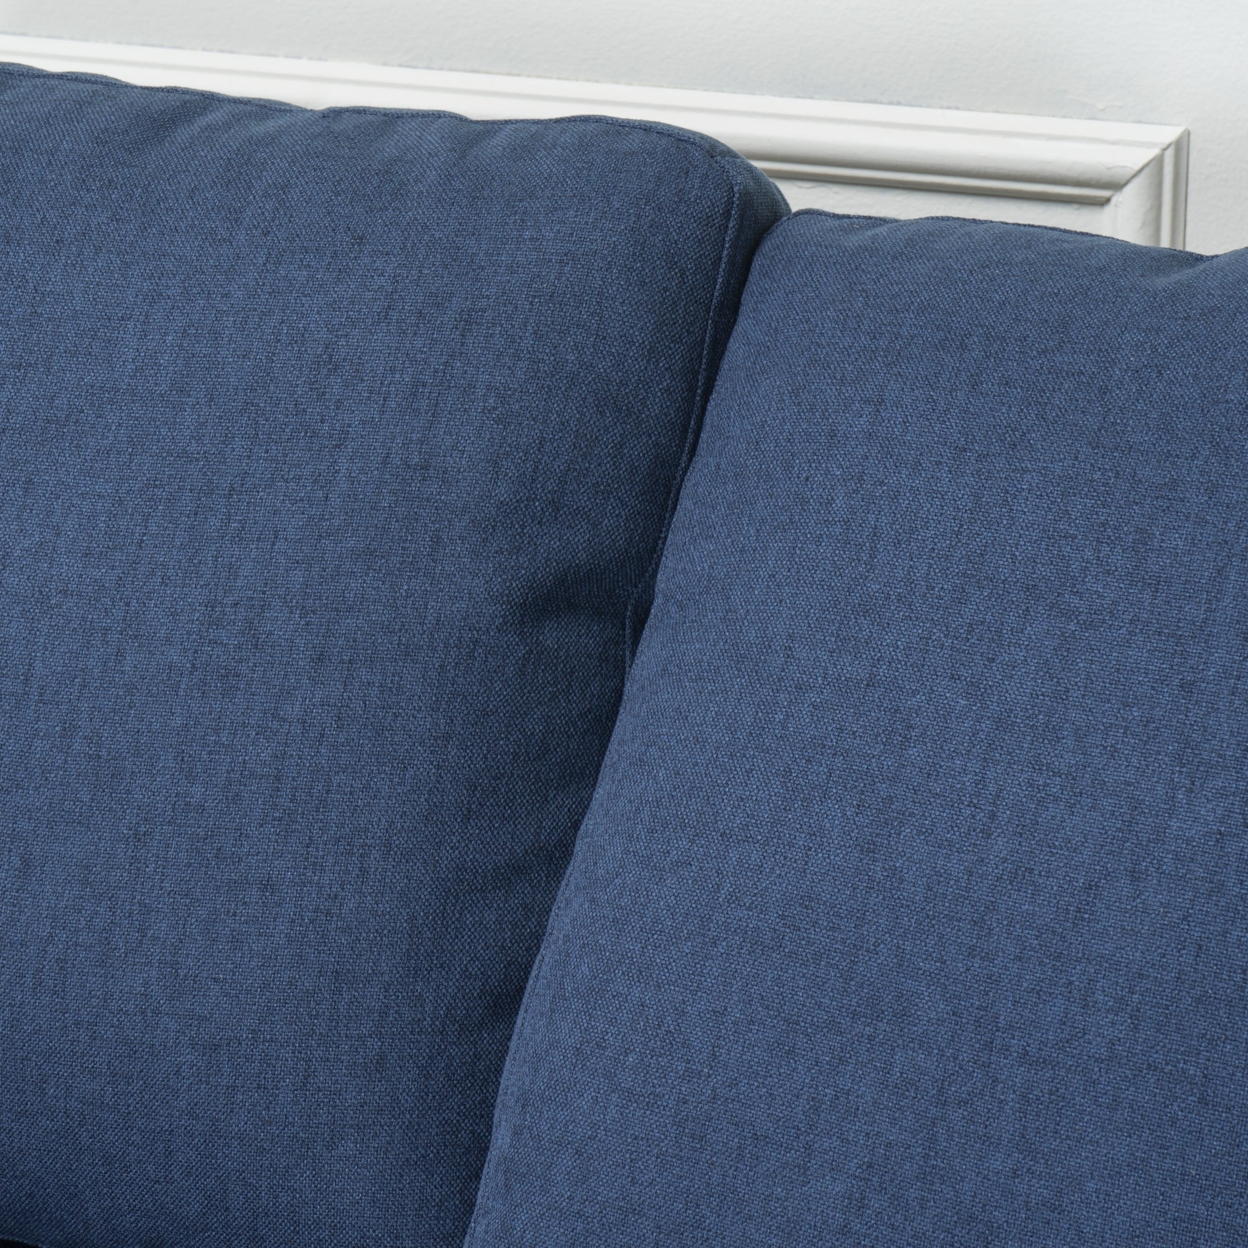 Carolina Fabric Sectional Couch - Dark Blue